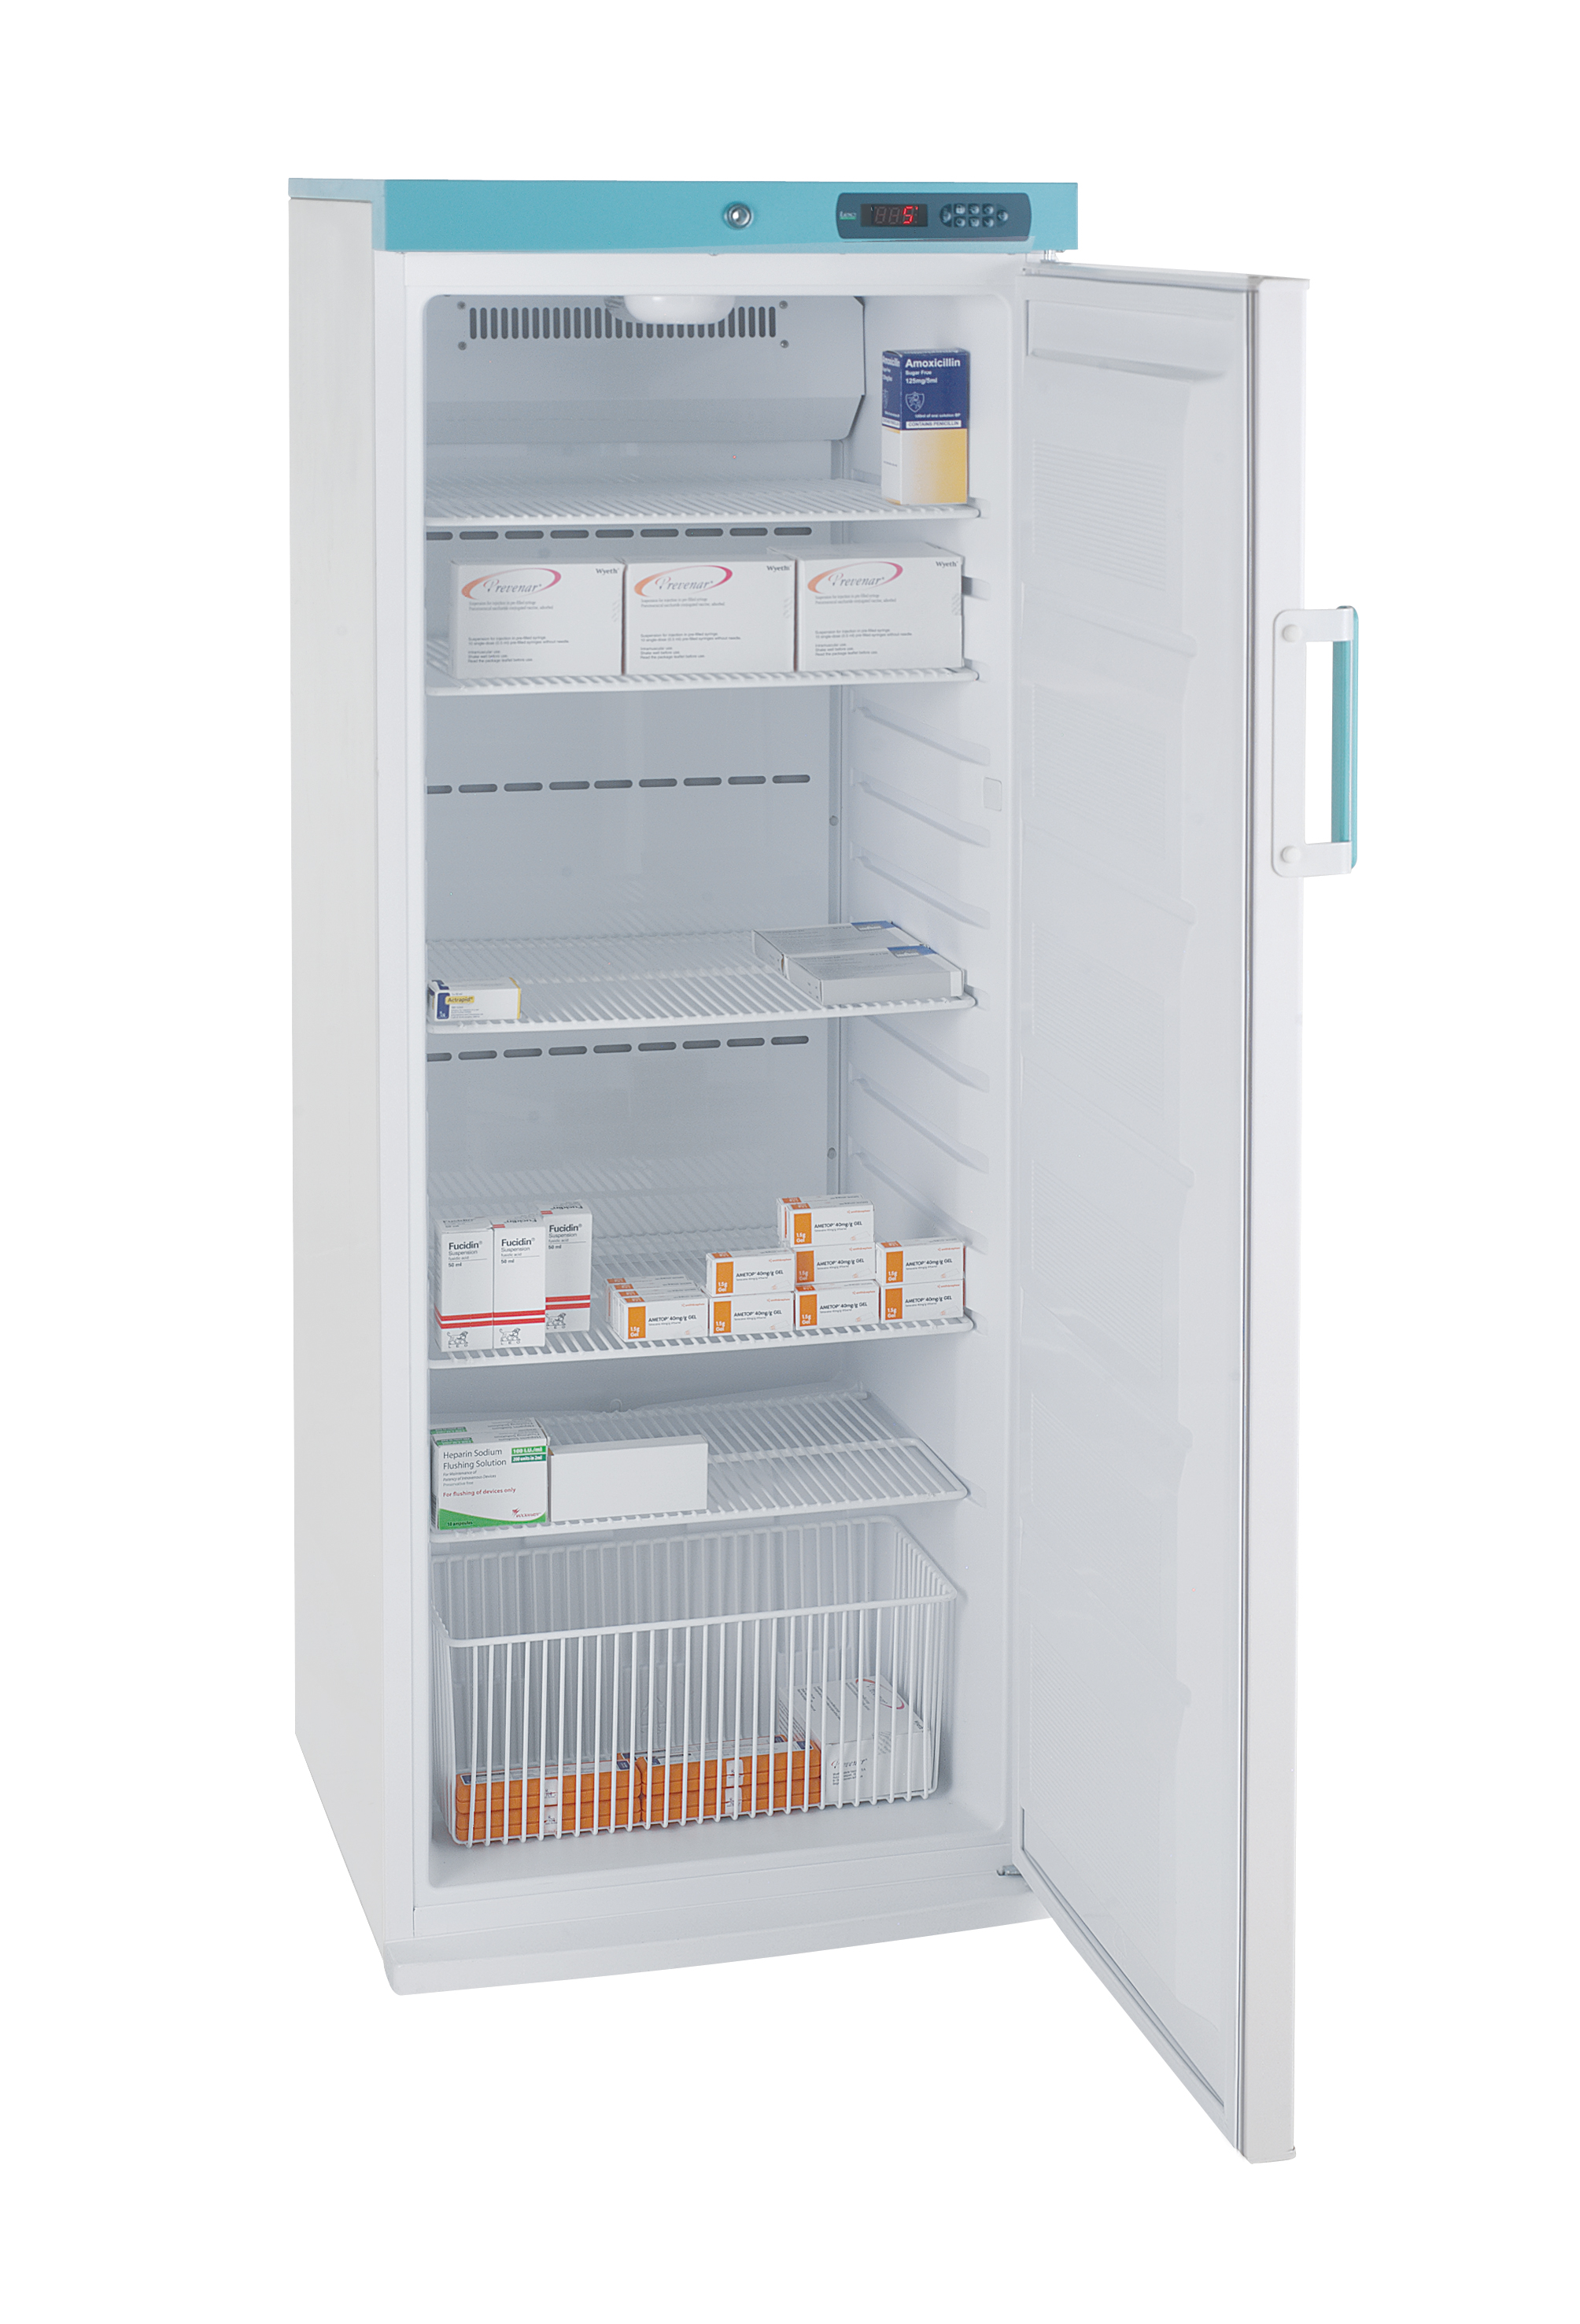 LEC Pharmacy PESR273 Refrigerator